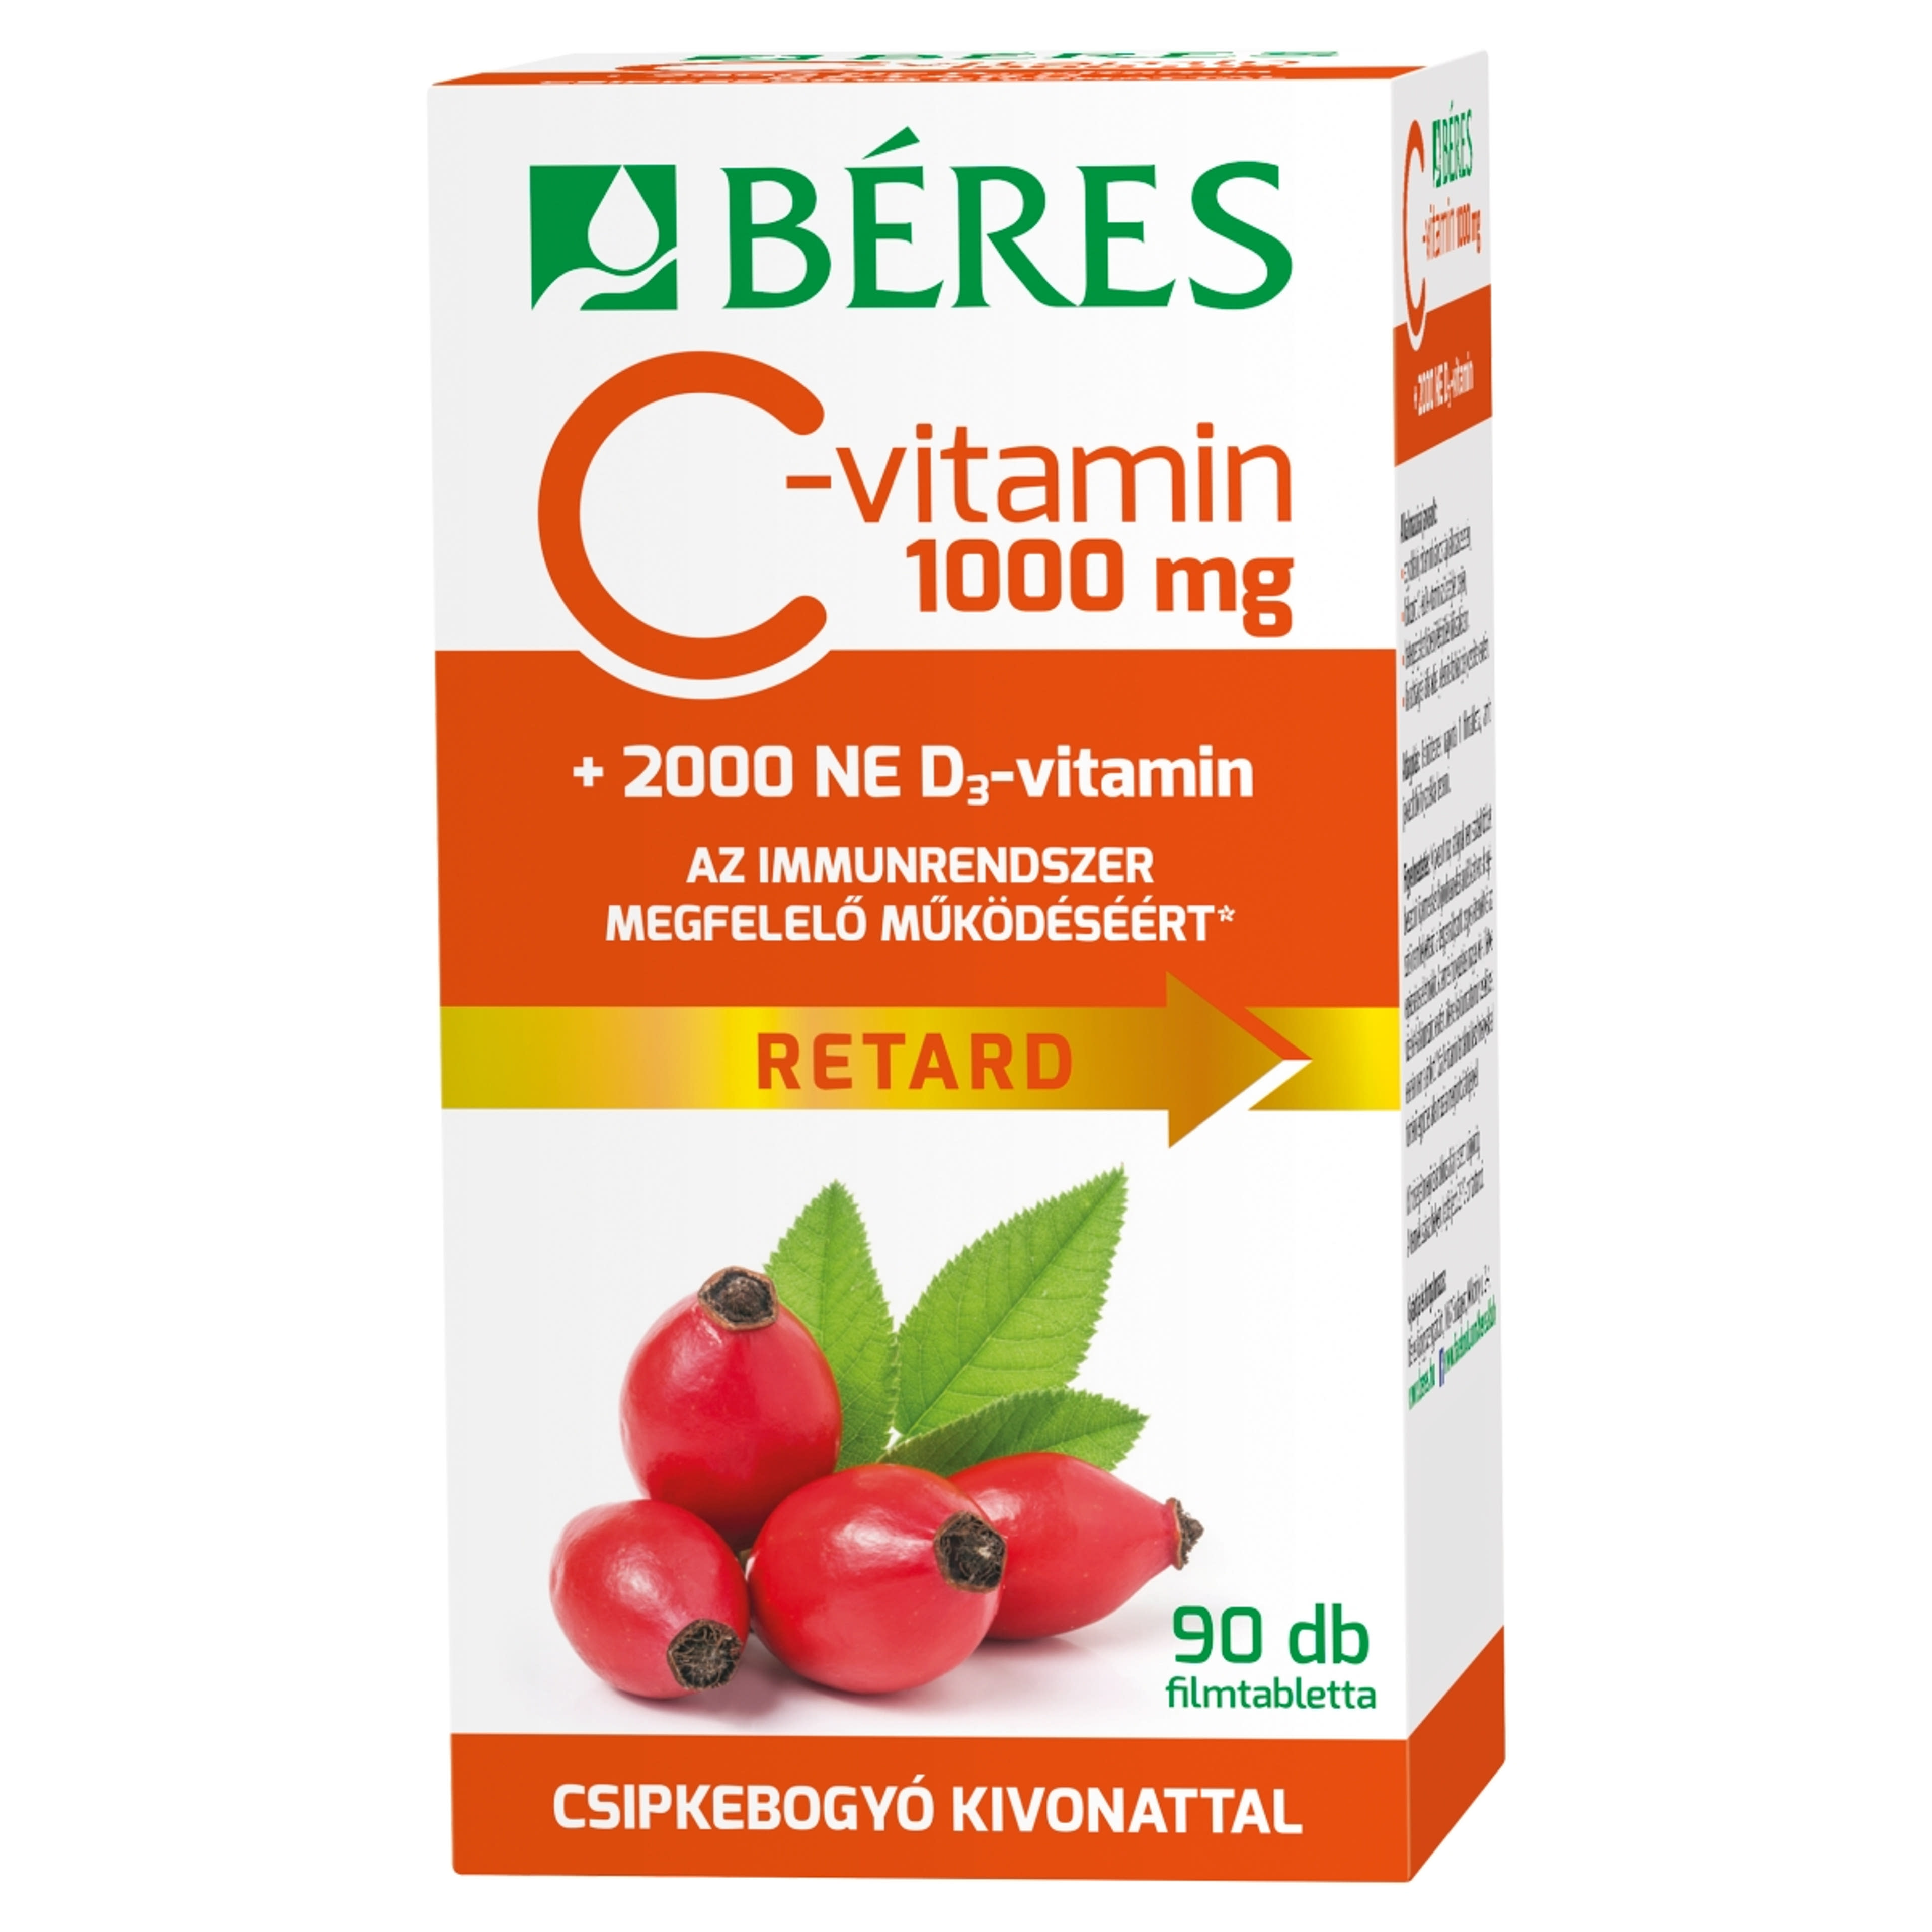 Béres C-vitamin 1000mg Retard filmtabletta csipkebogyó+ 2000 NE D3-vitamin - 90 db-2